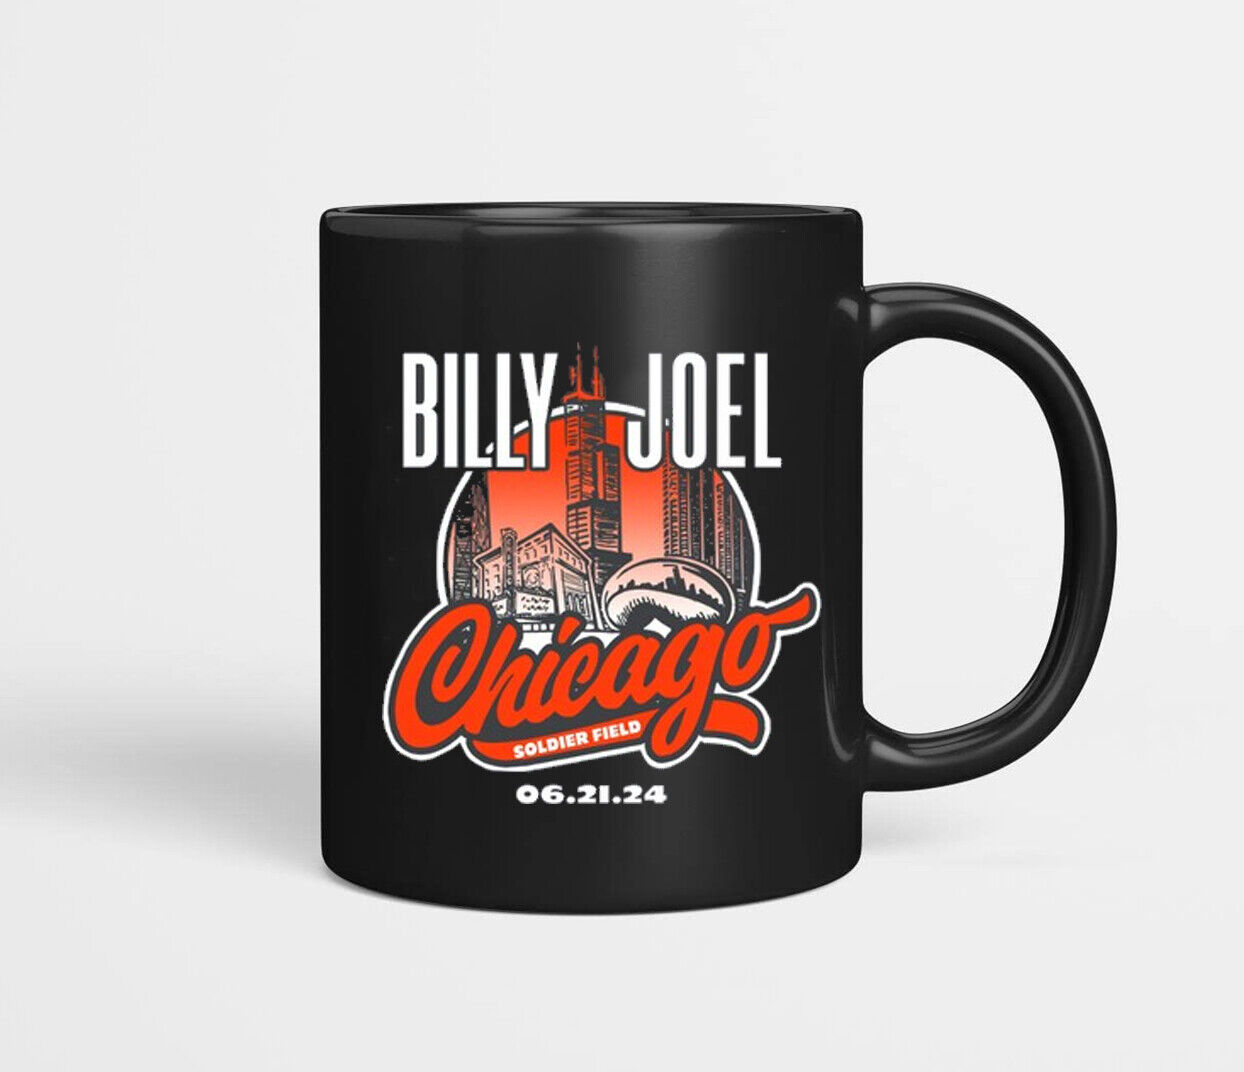 Billy Joel Show Soldier Field, Chicago, IL June 21, 2024 Coffee Mug